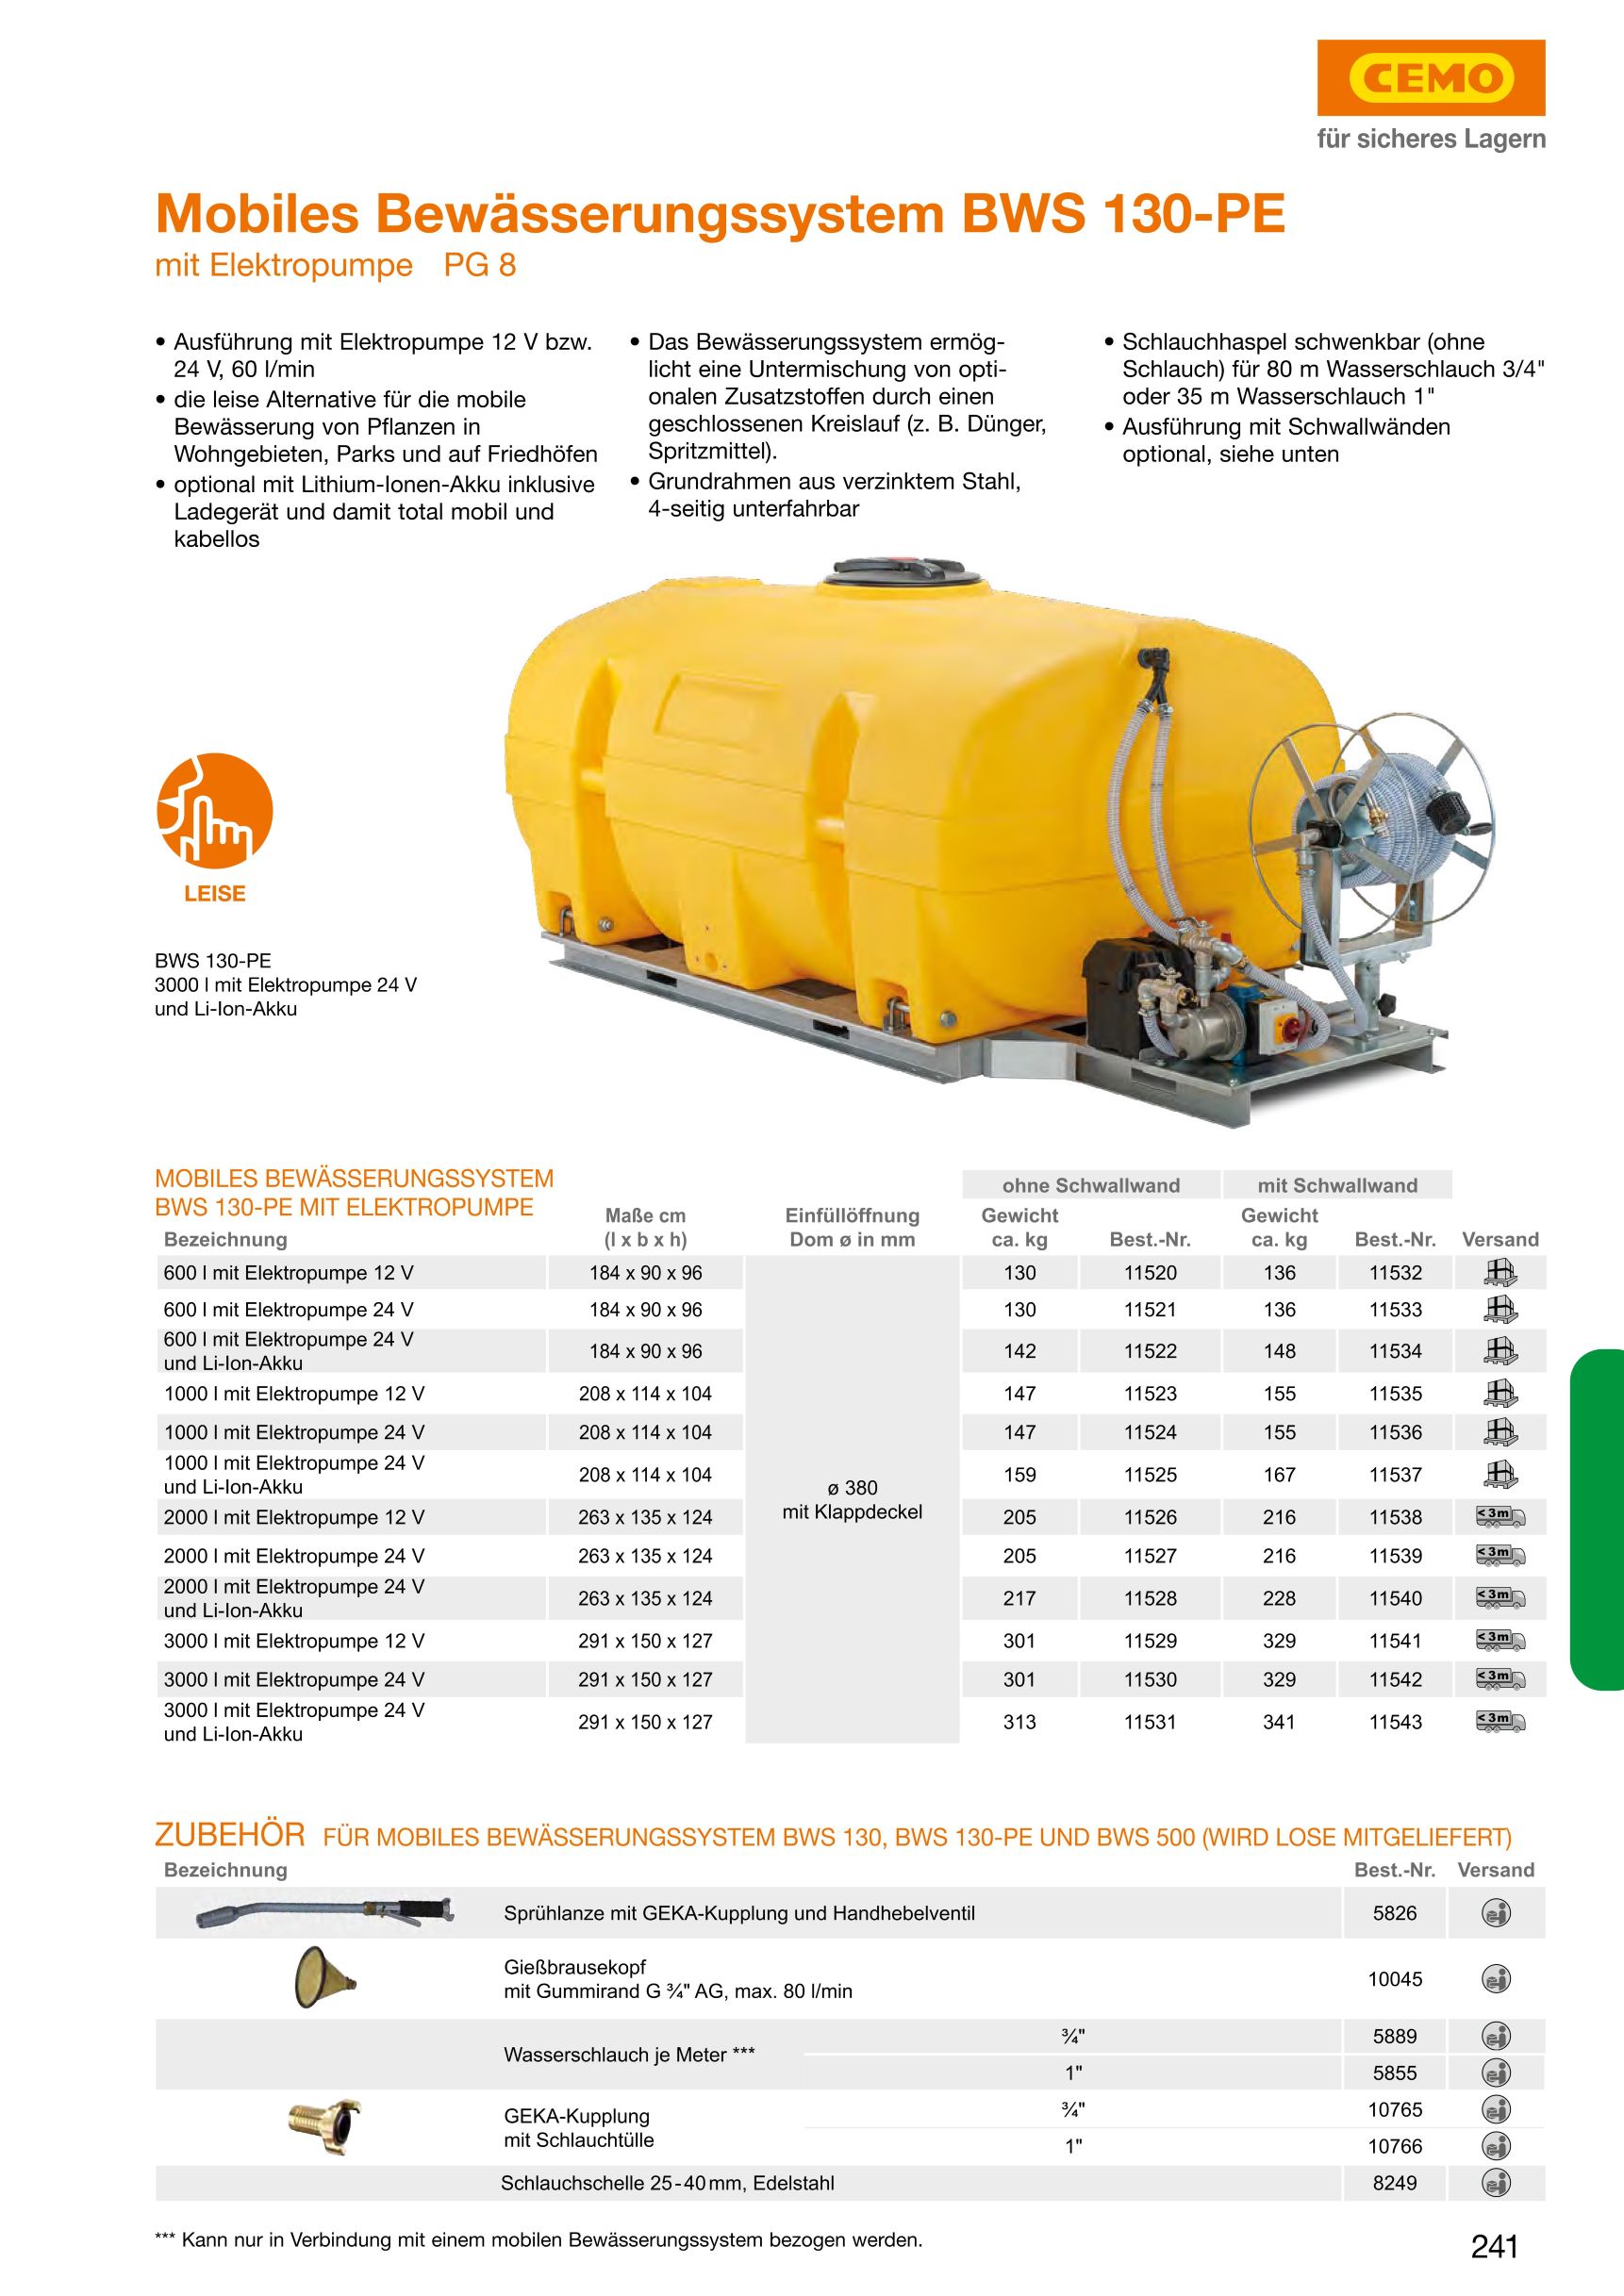 CEMO Mobiles Bewässerungssystem BWS 130-PE, 1000 l, Motorpumpe - 8685